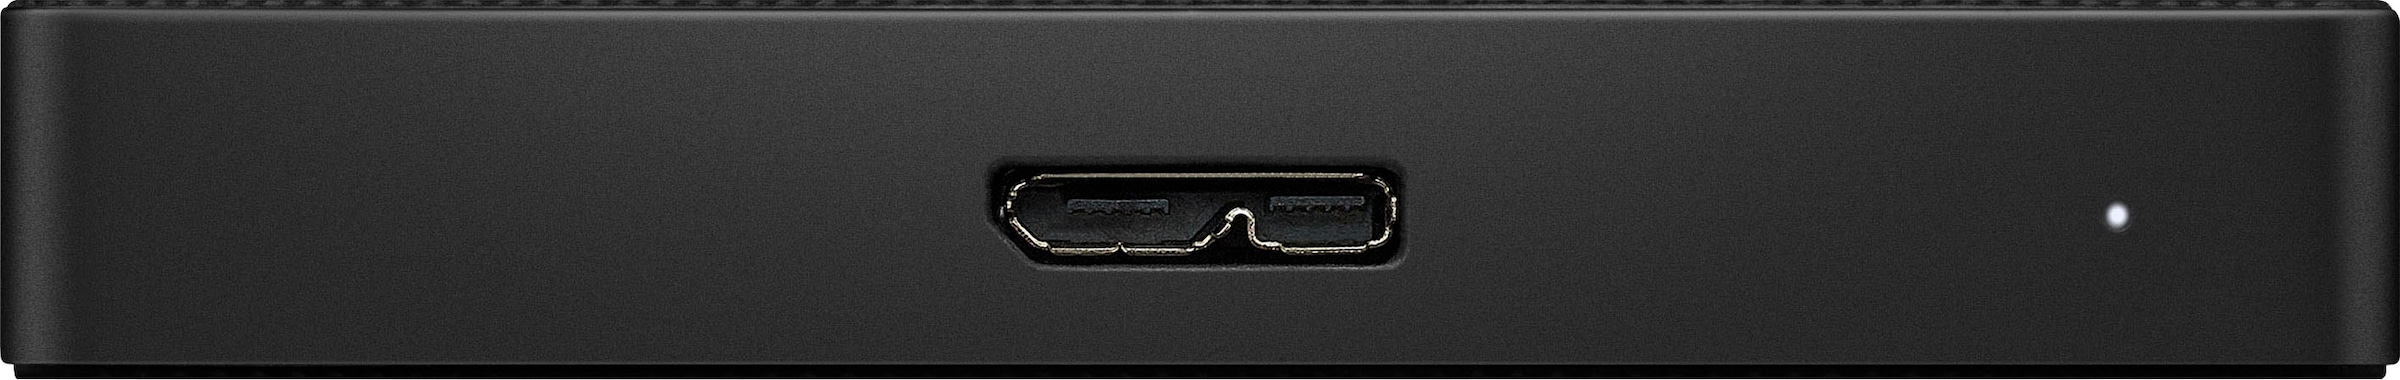 Seagate externe HDD-Festplatte »Expansion 2TB«, Portable | USB 2,5 Zoll, Anschluss BAUR 3.0